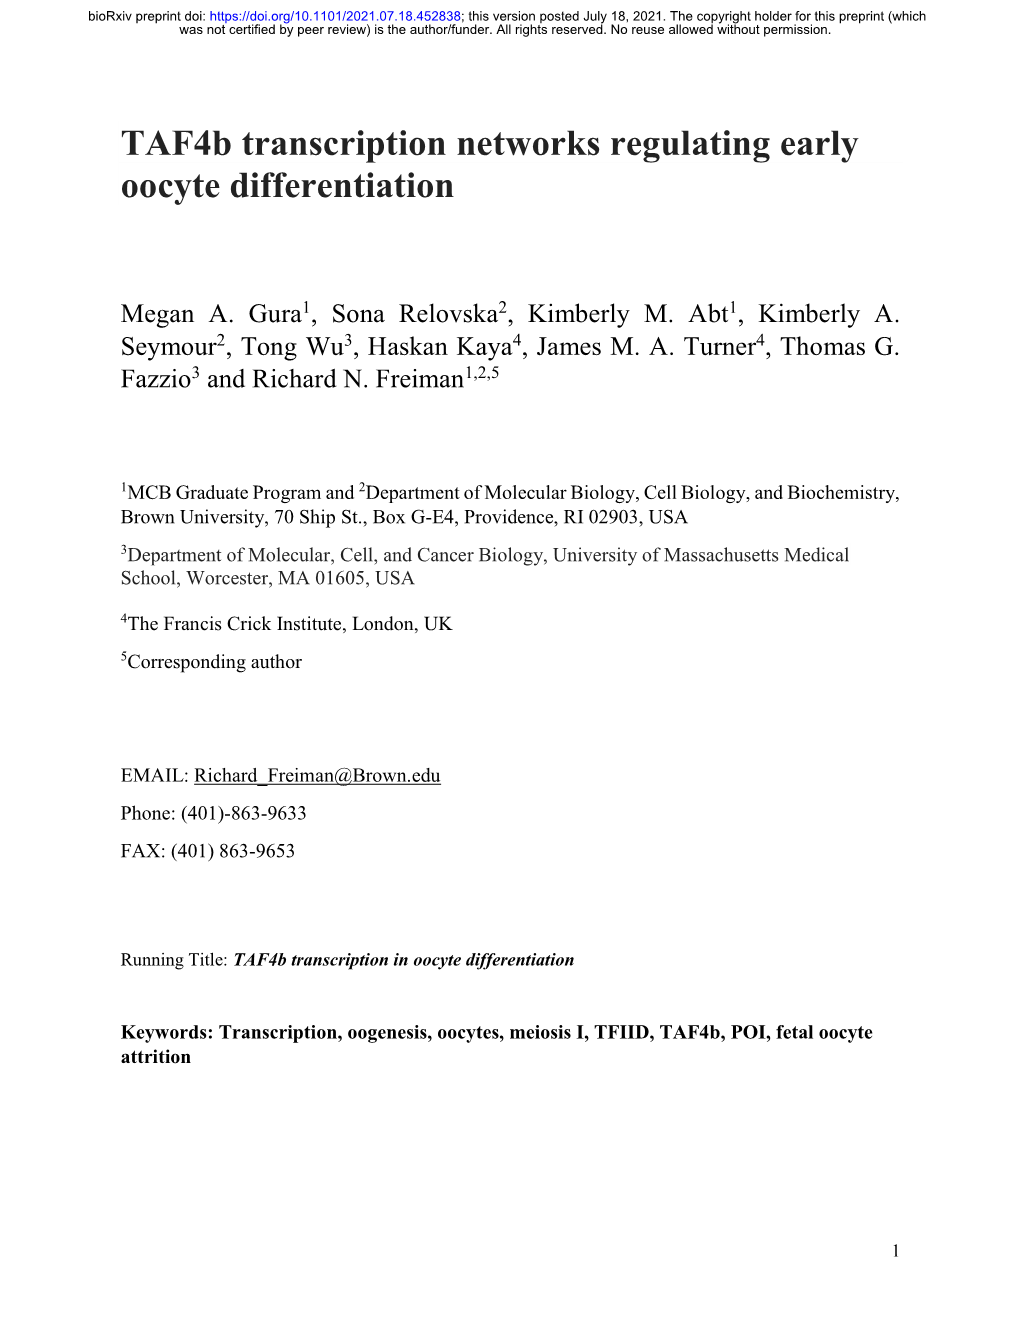 Taf4b Transcription Networks Regulating Early Oocyte Differentiation